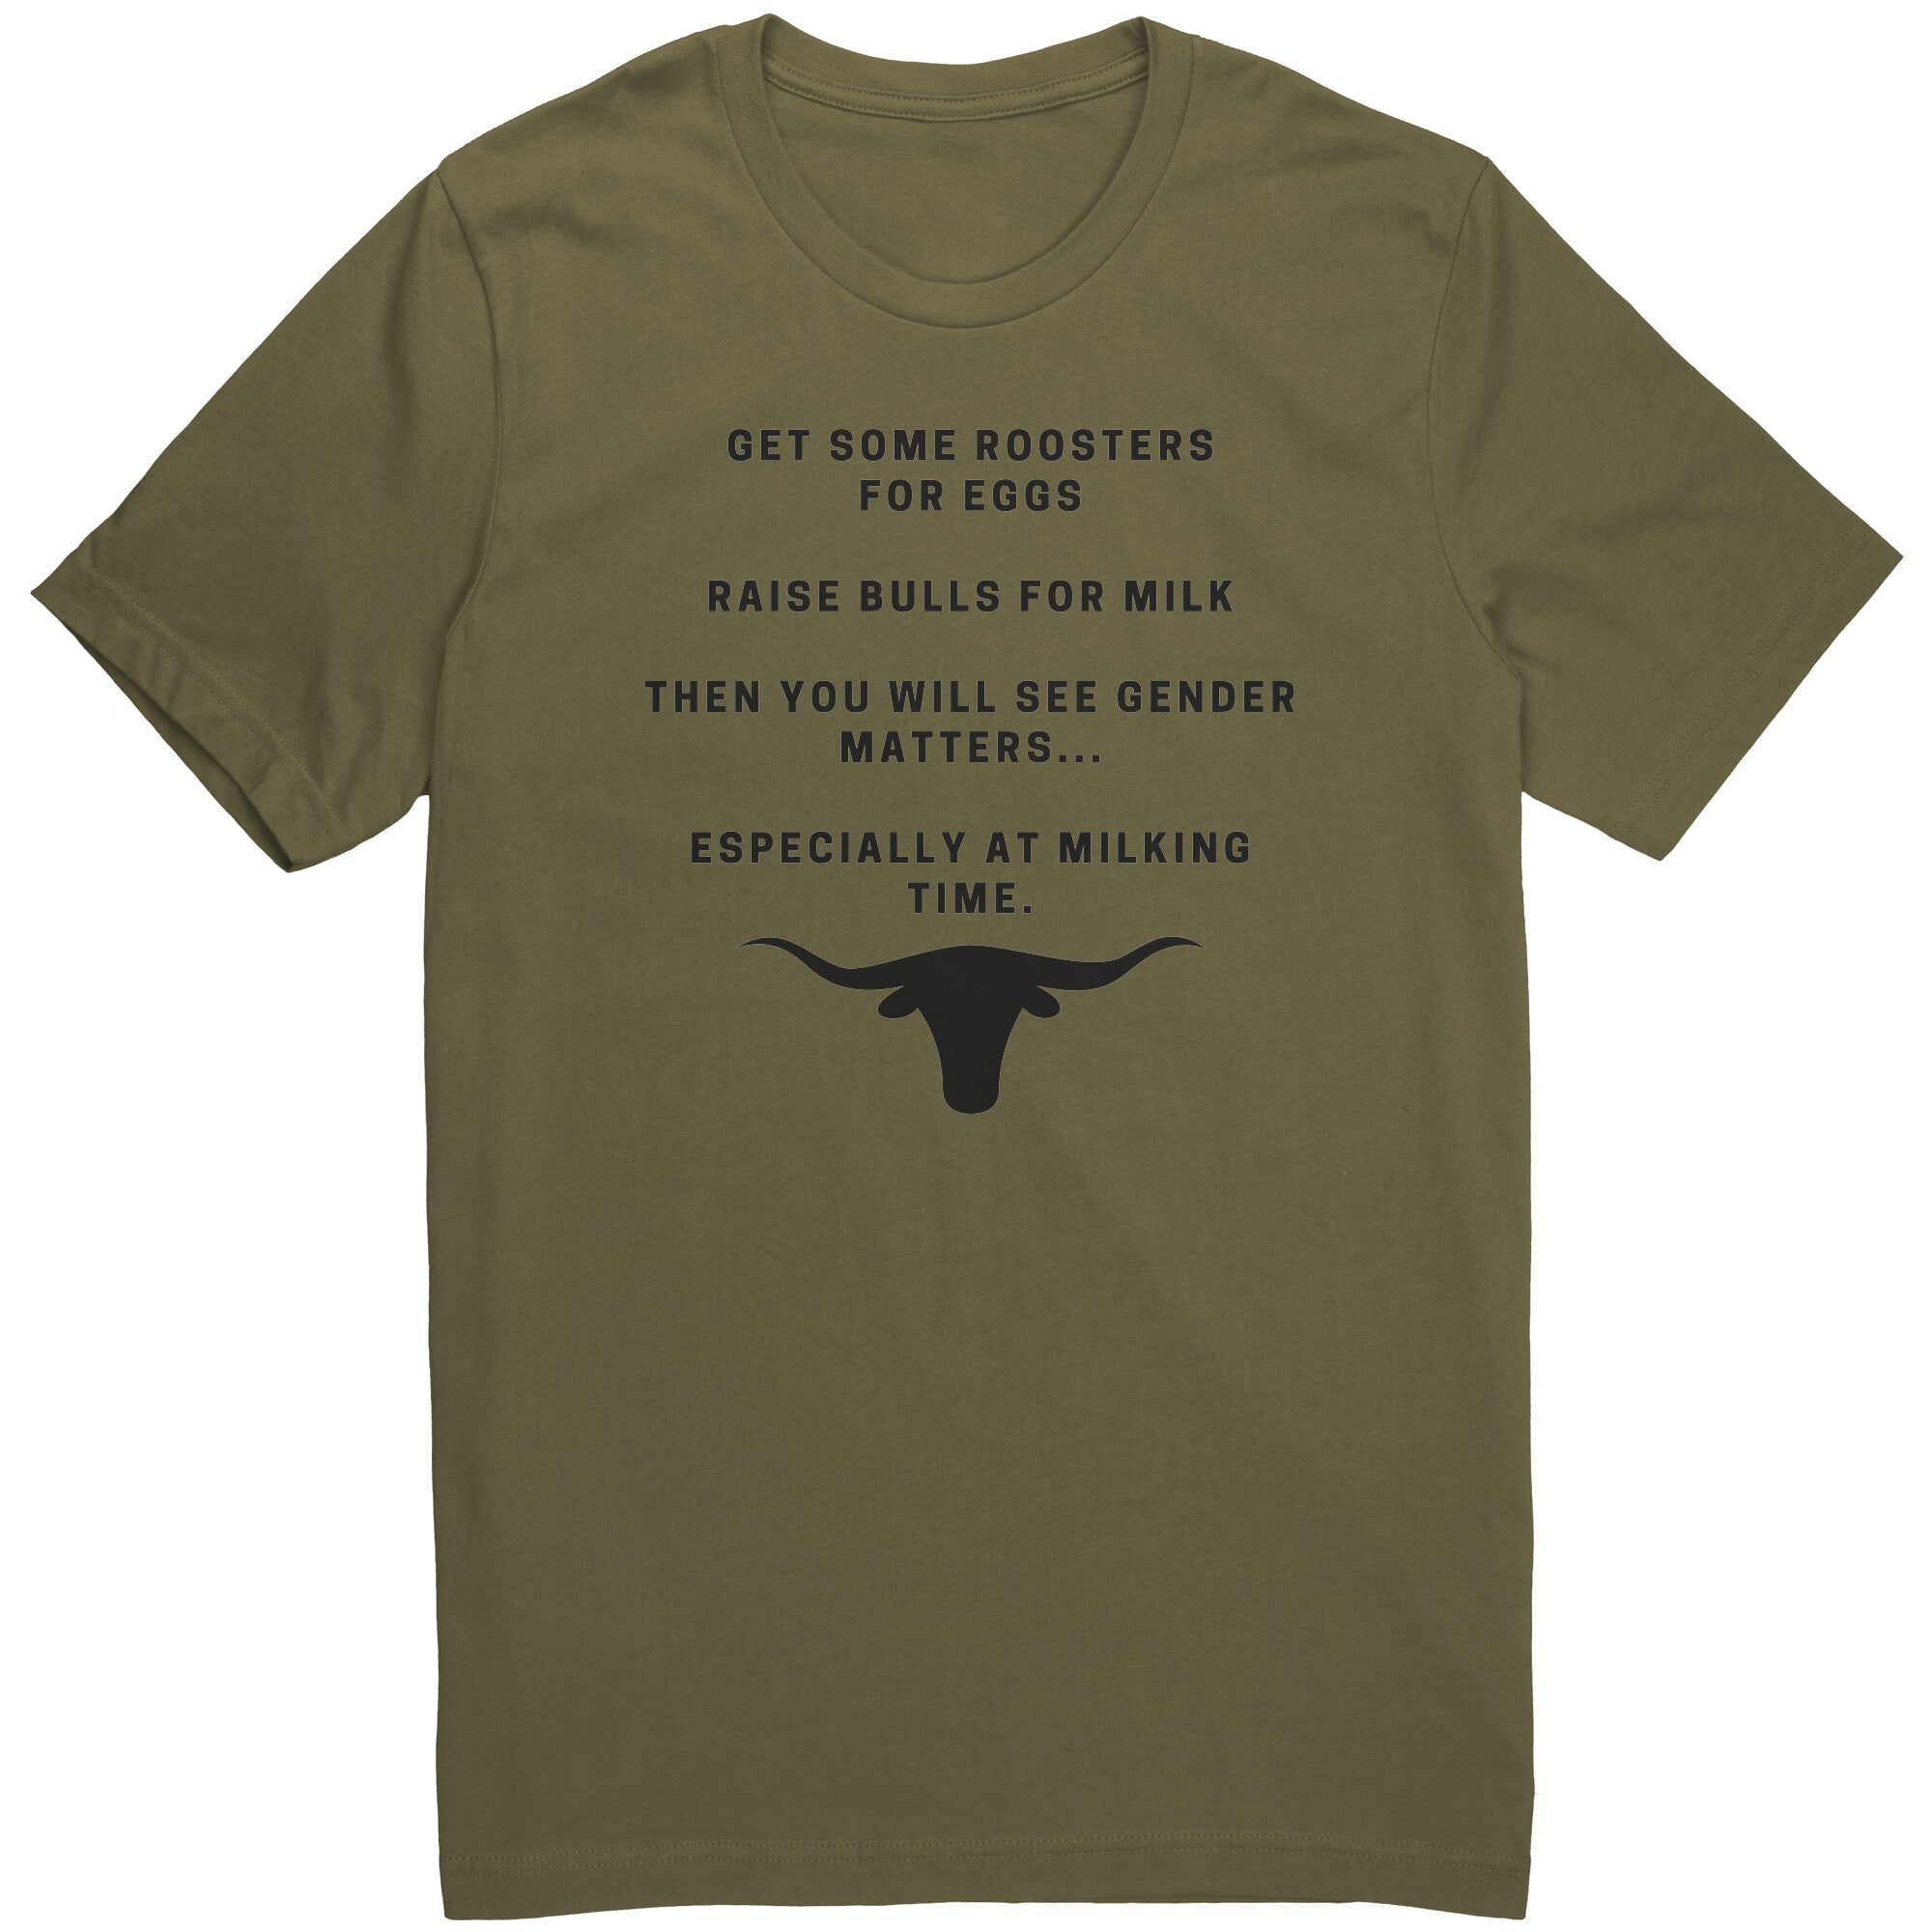 Funny Mens Shirt, Sarcastic Shirt For Men, Novelty Shirts, Offensive Shirt Milk A Bull Gender Matters Unisex Tee olive